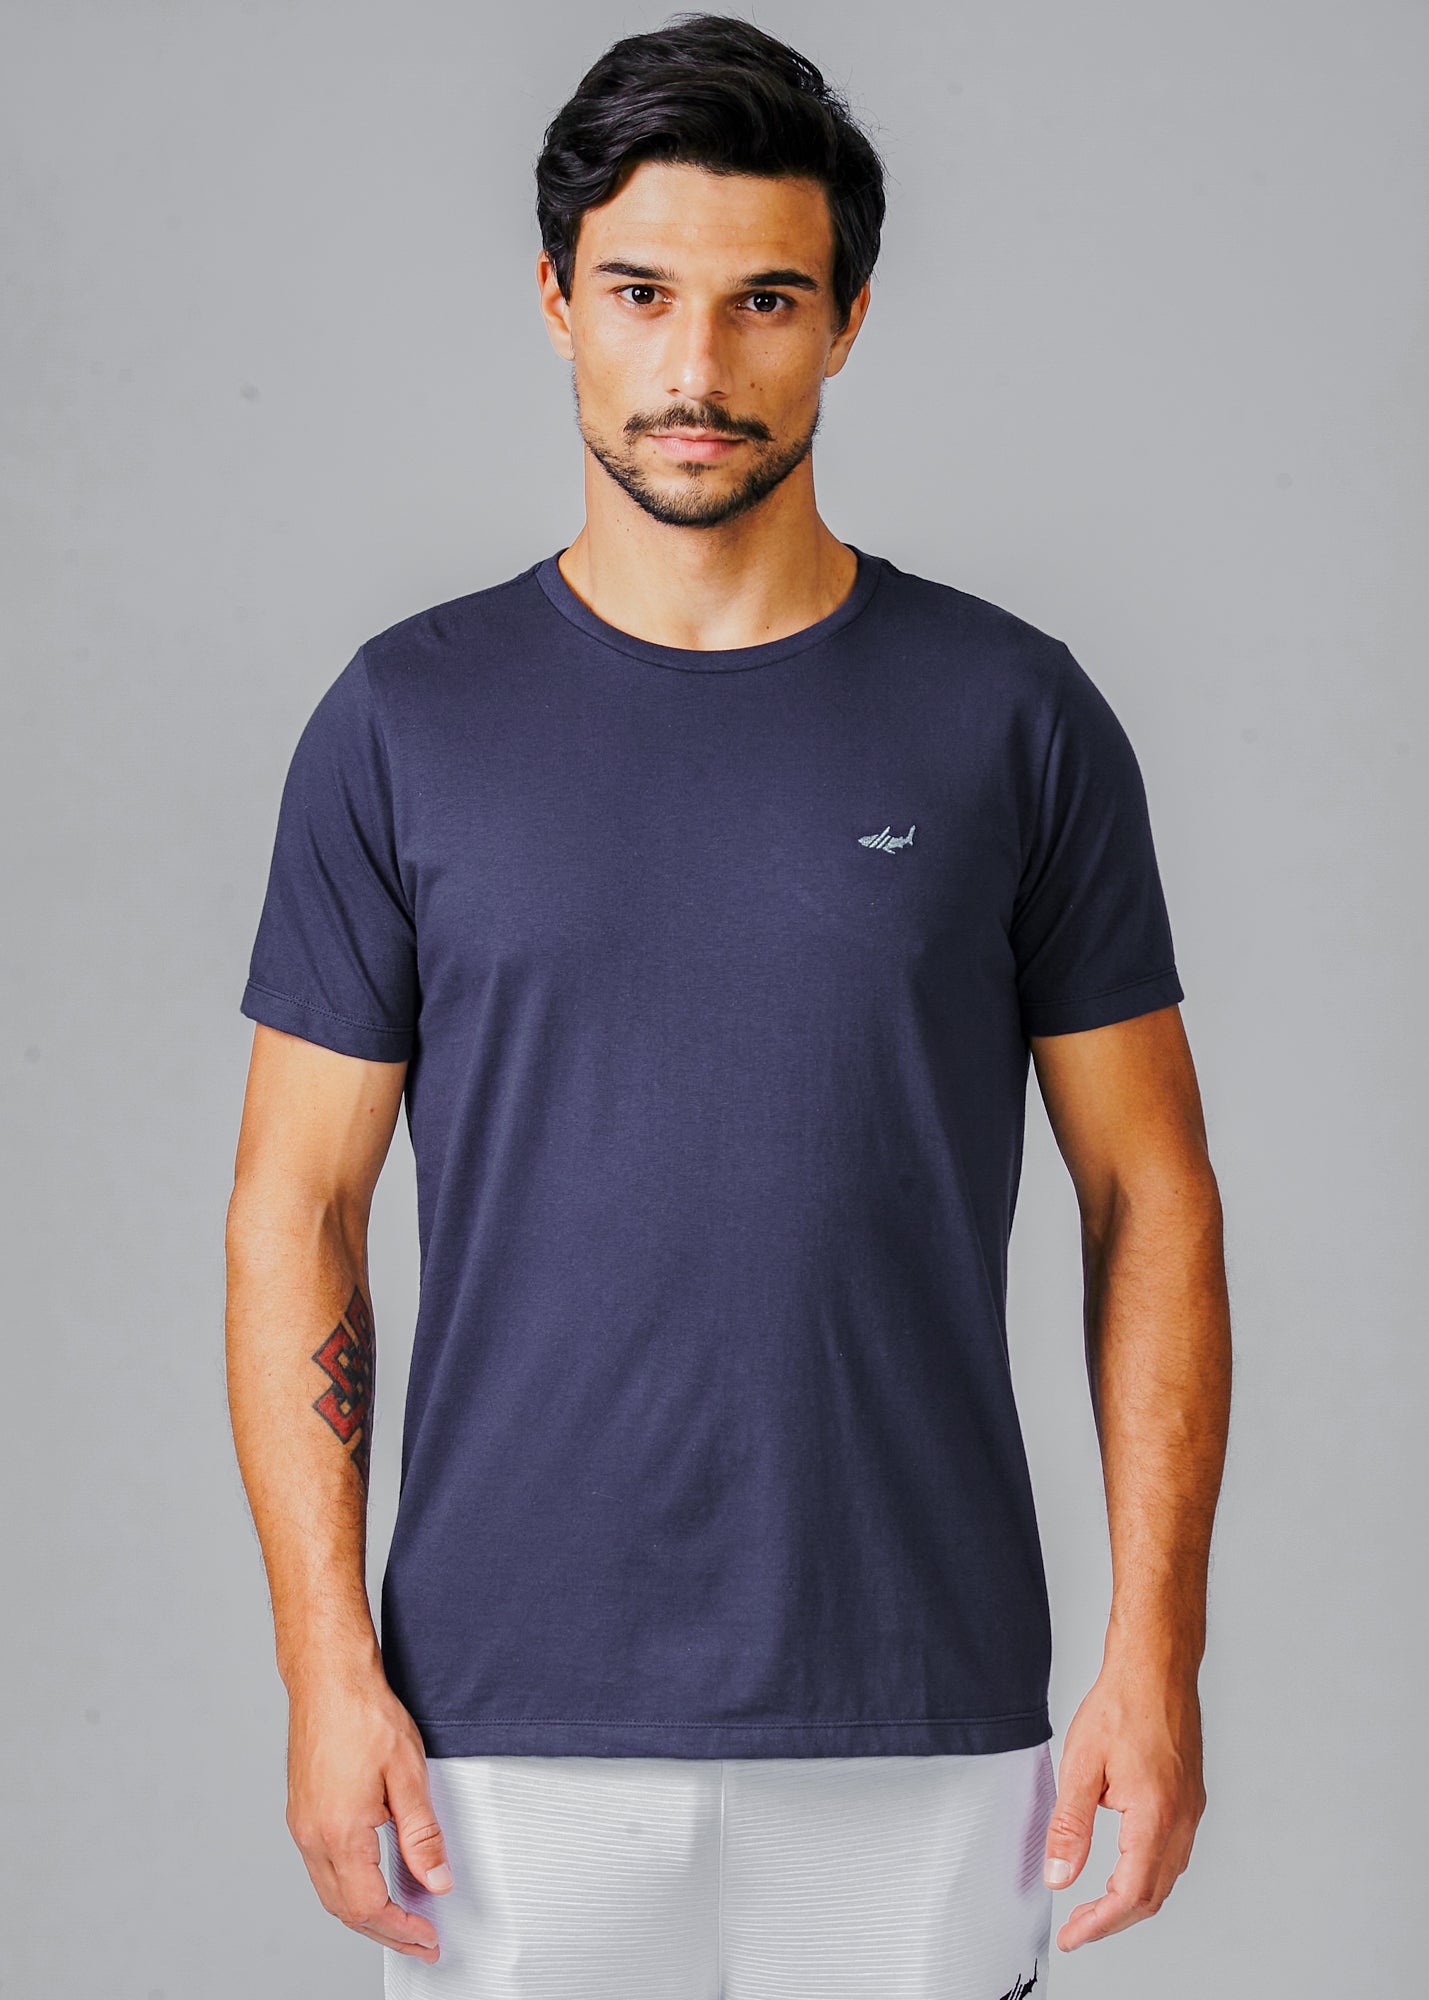 Camiseta Básica - Azul Marinho